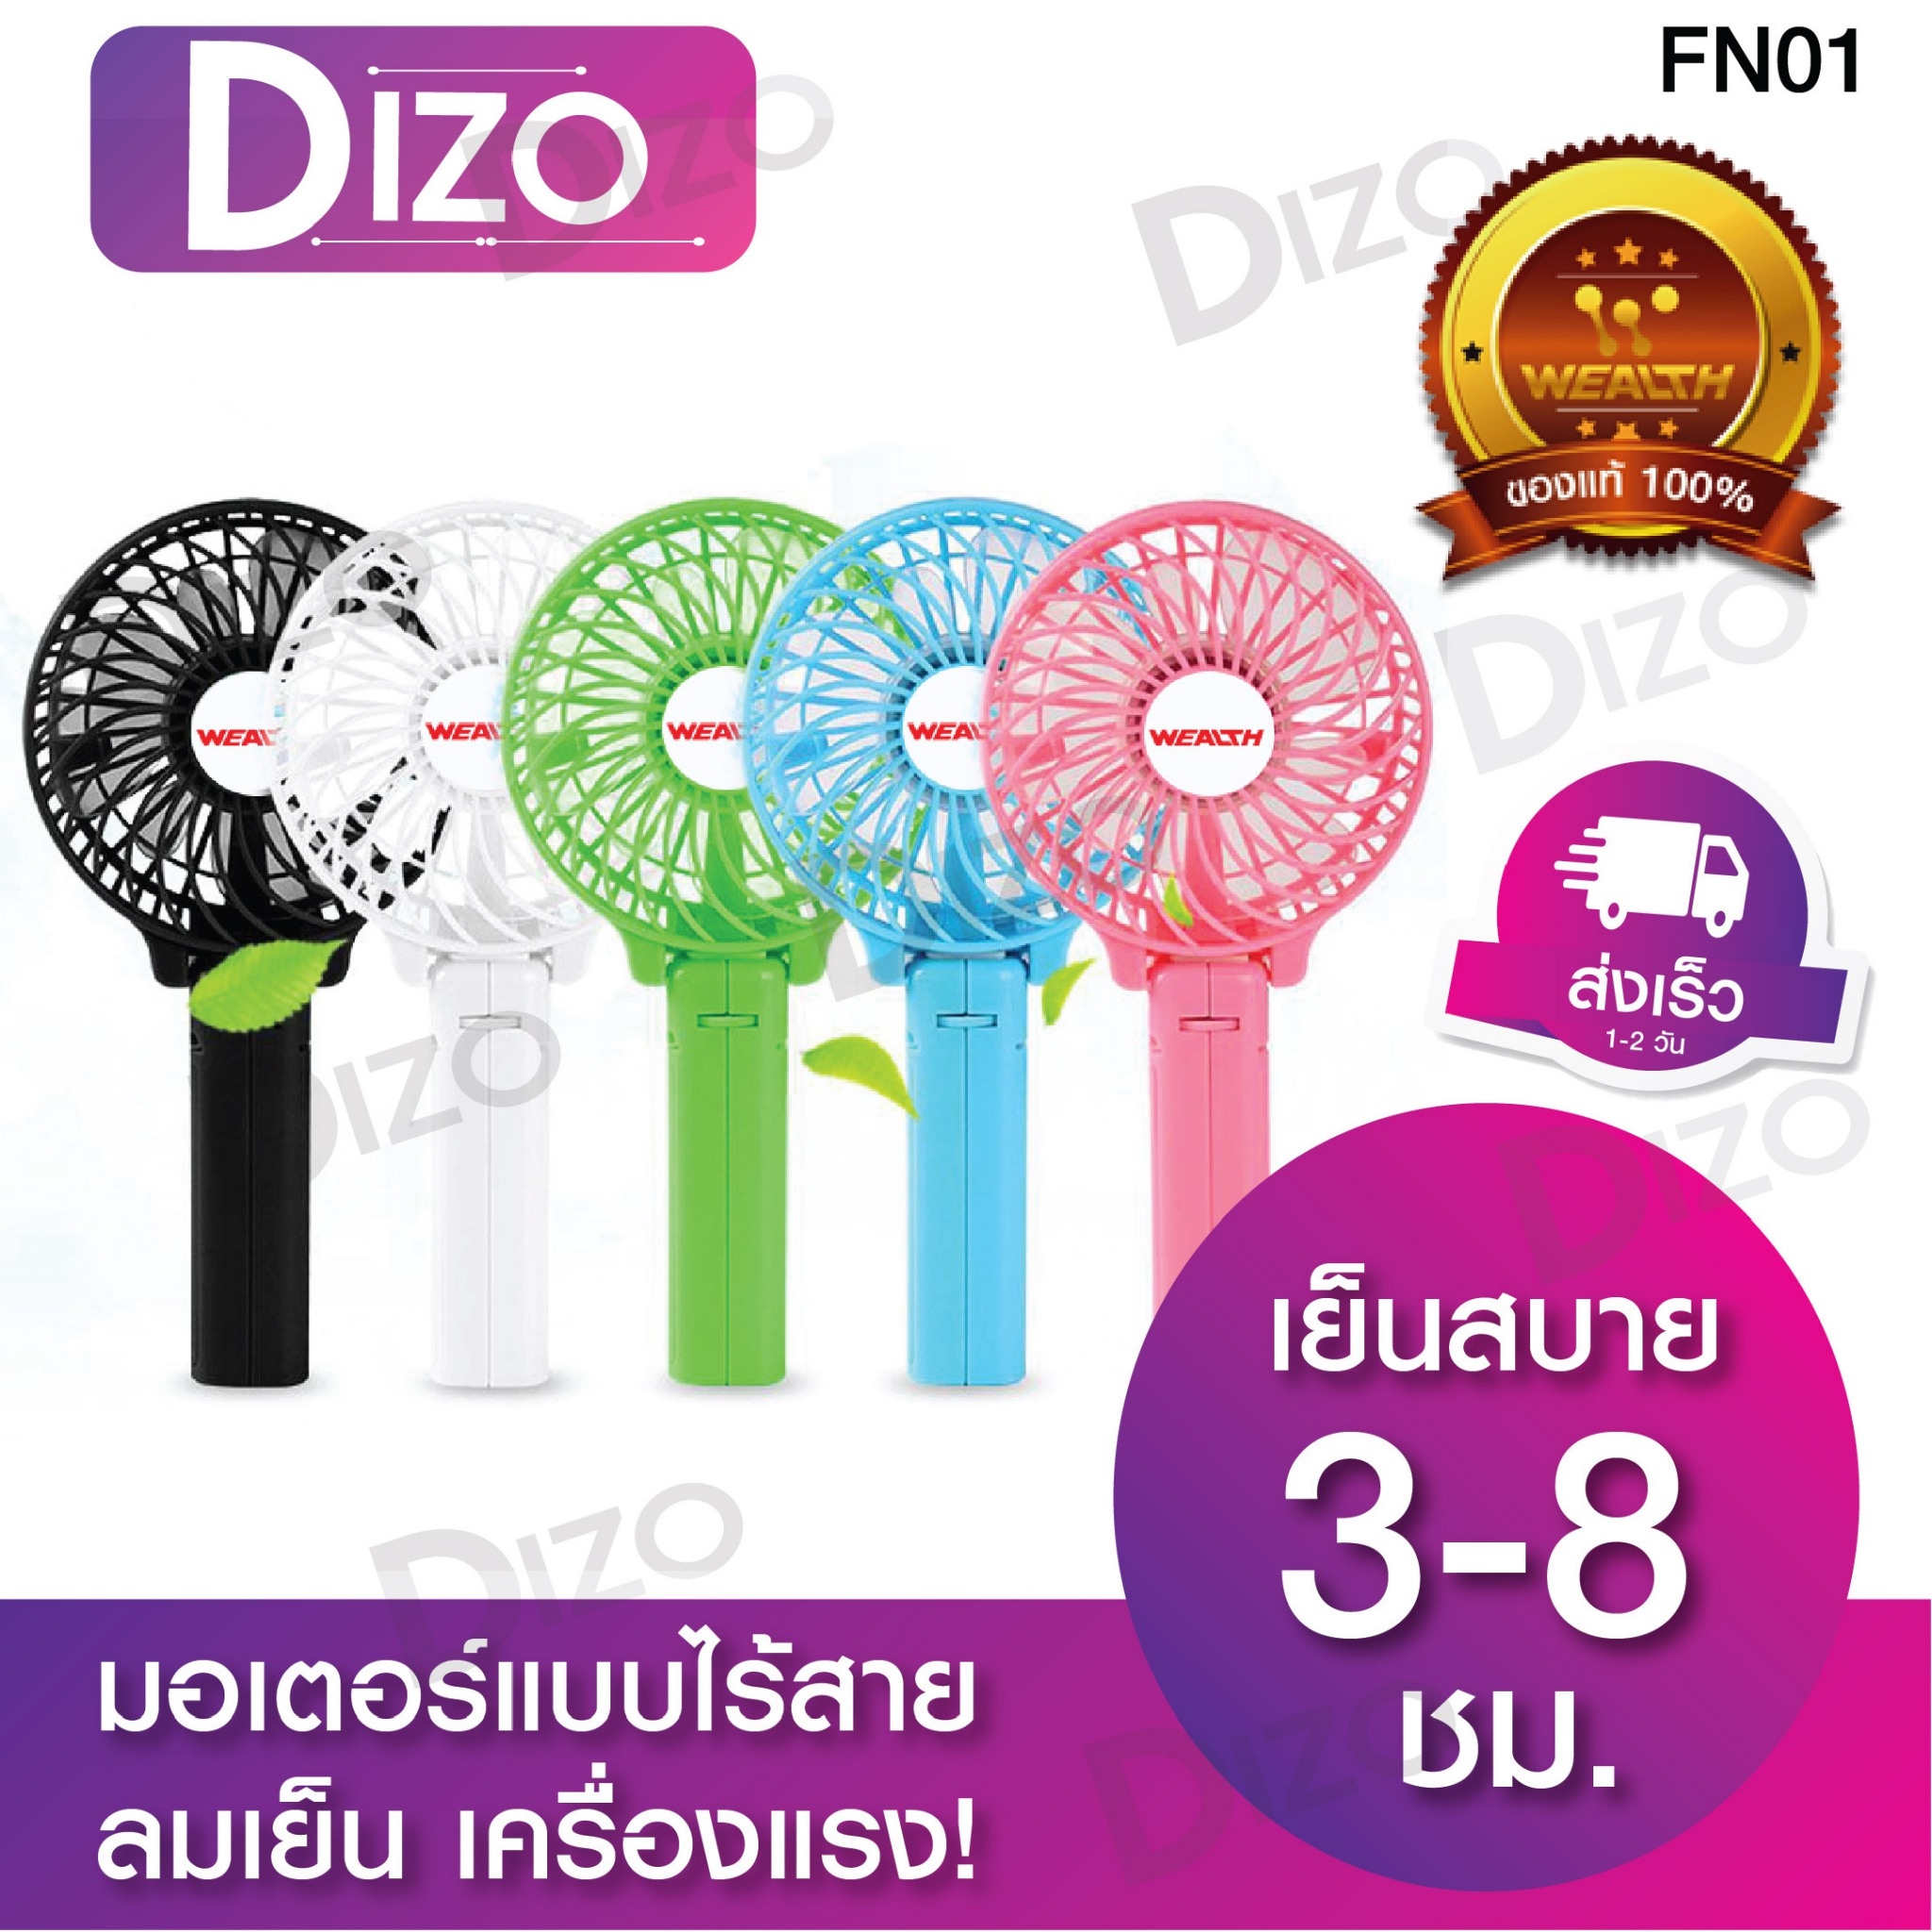 DiZo (FC1 พัดลมมินิ) พัดลมขนาดเล็ก พัดลมพกพา USB เย็นแรง 3 เท่าใหม่ล่าสุด ชาร์จเร็ว ใช้นาน พัดลมมือจับ ปรับระดับได้ 2 in 1